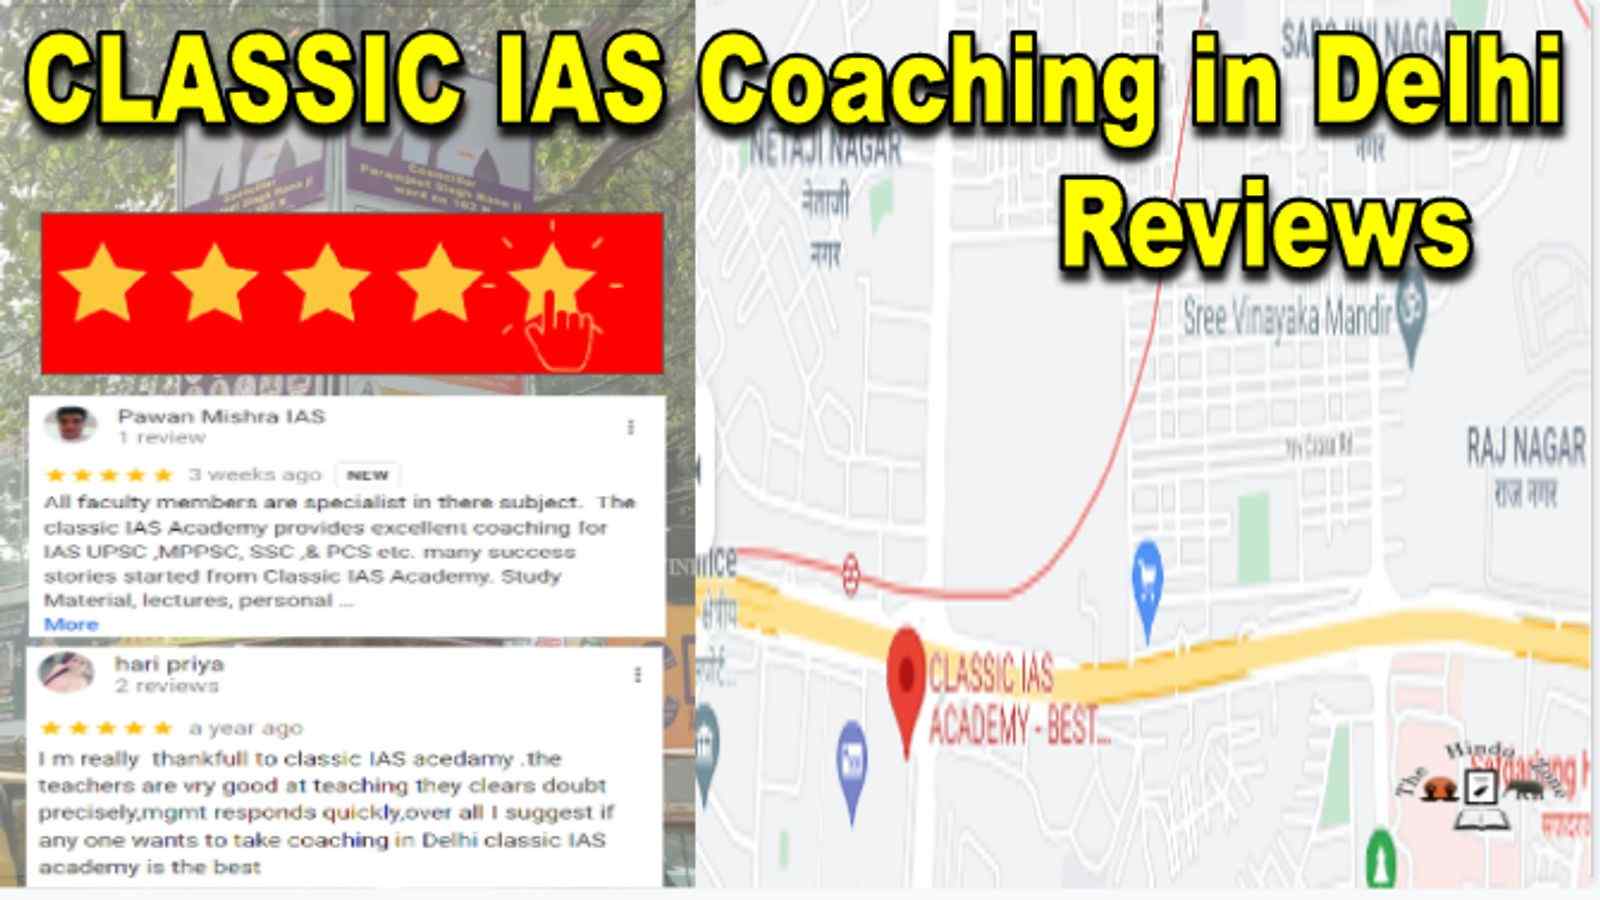 Classic IAS Coaching in Delhi Reviews